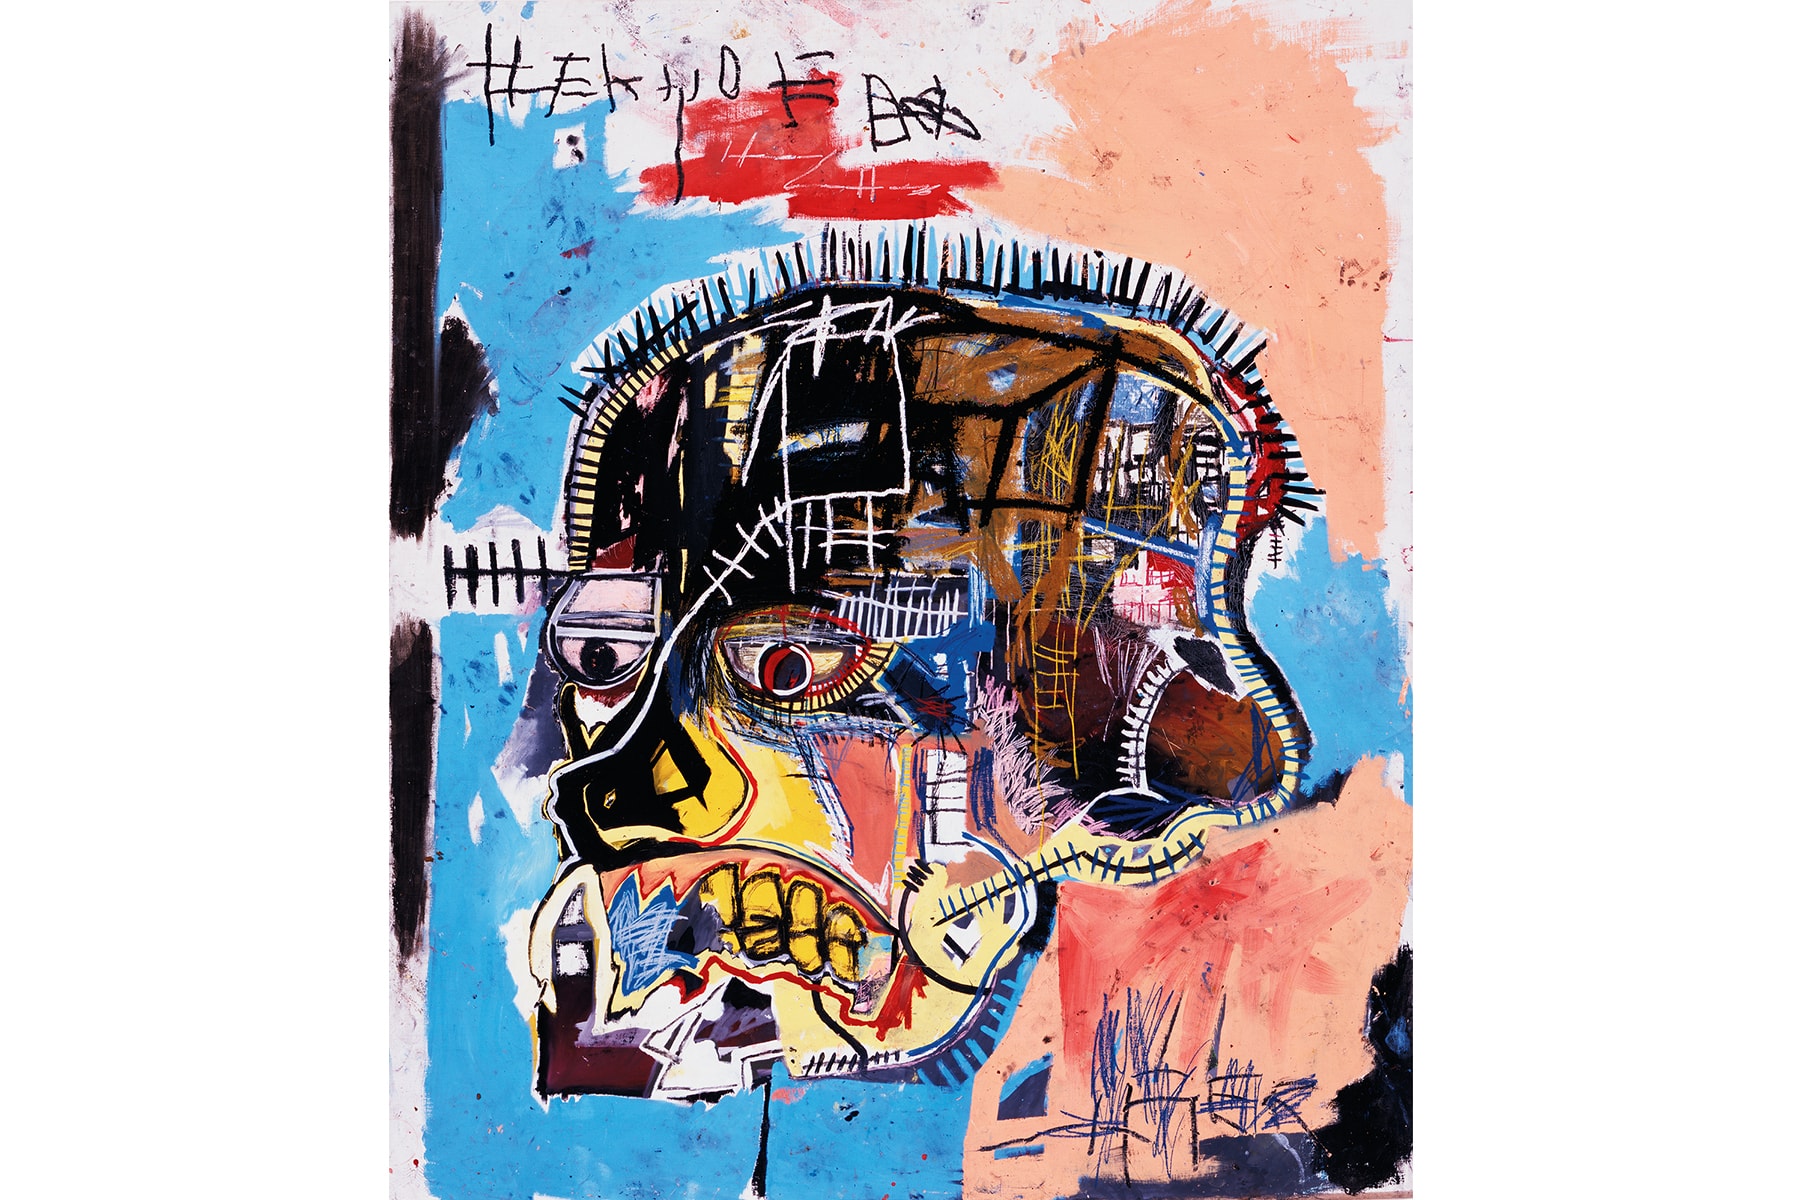 Fondation Louis Vuitton 將舉辦「Egon Schiele - Jean-Michel Basquiat」展覽